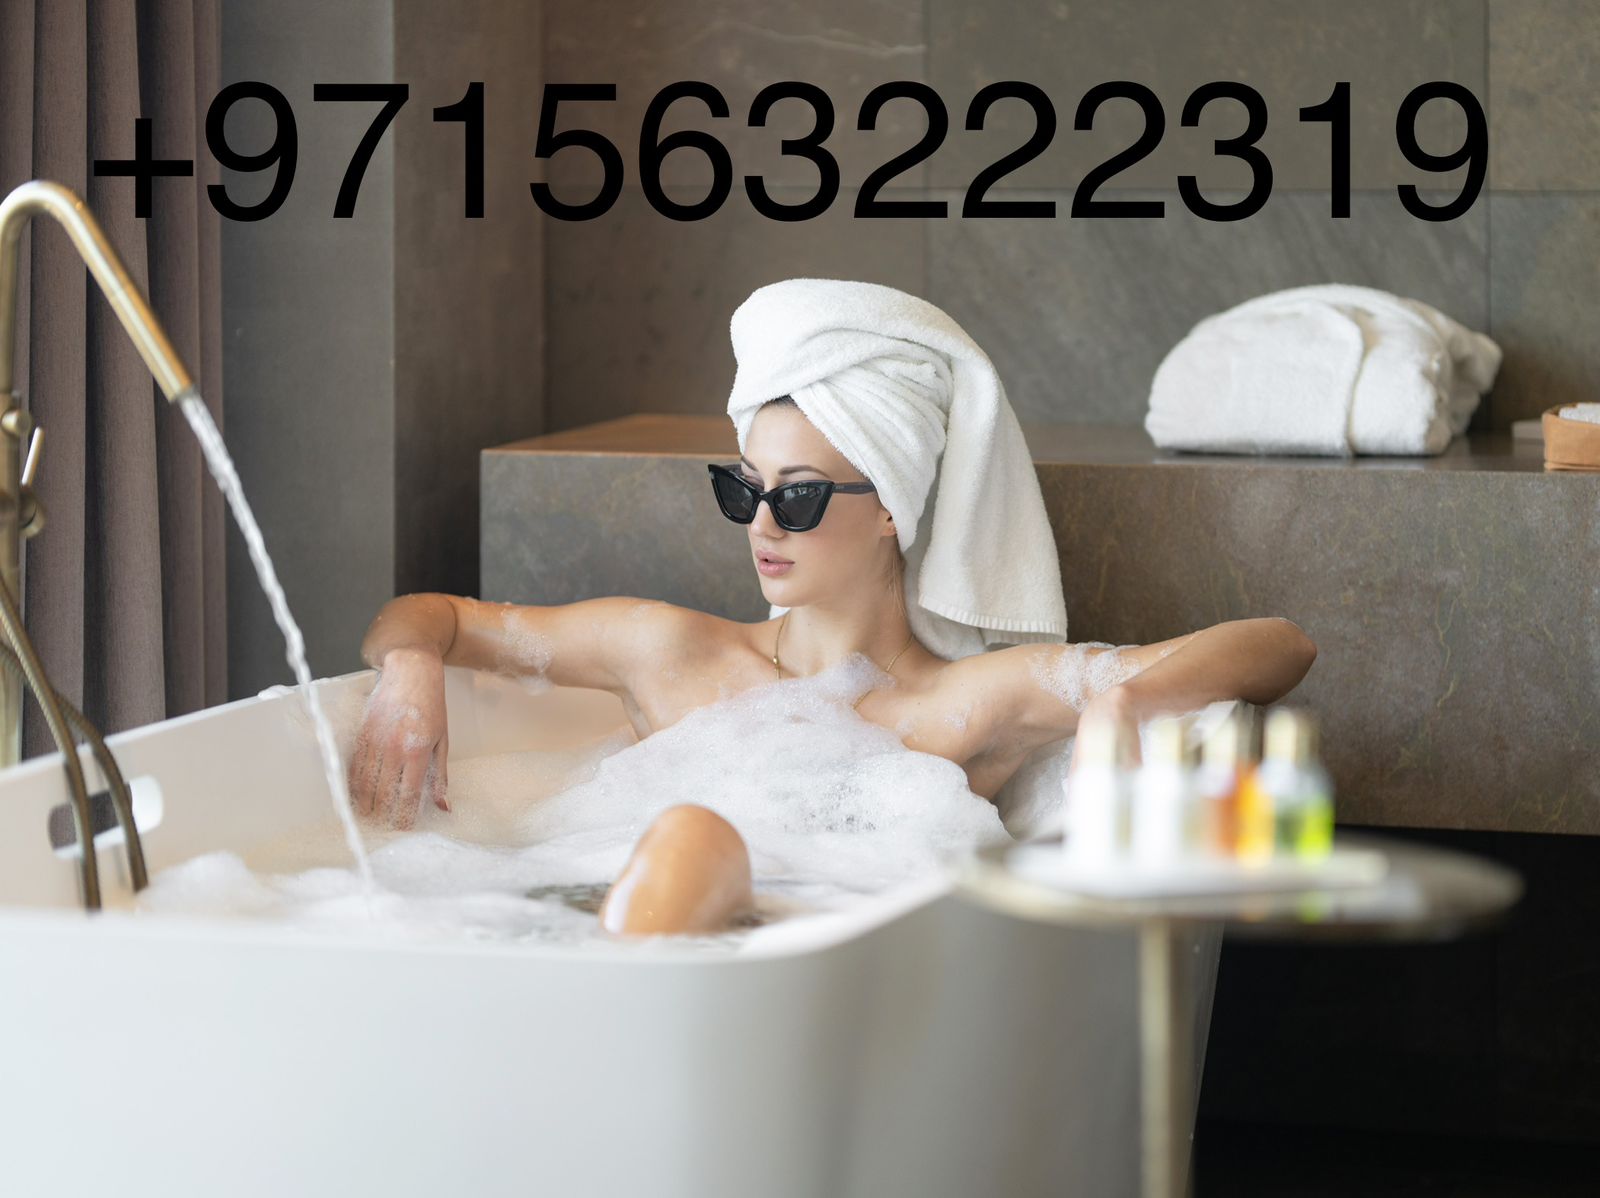 Spa For Rent In Hotel Jlt, Dubai, Call 0563222319